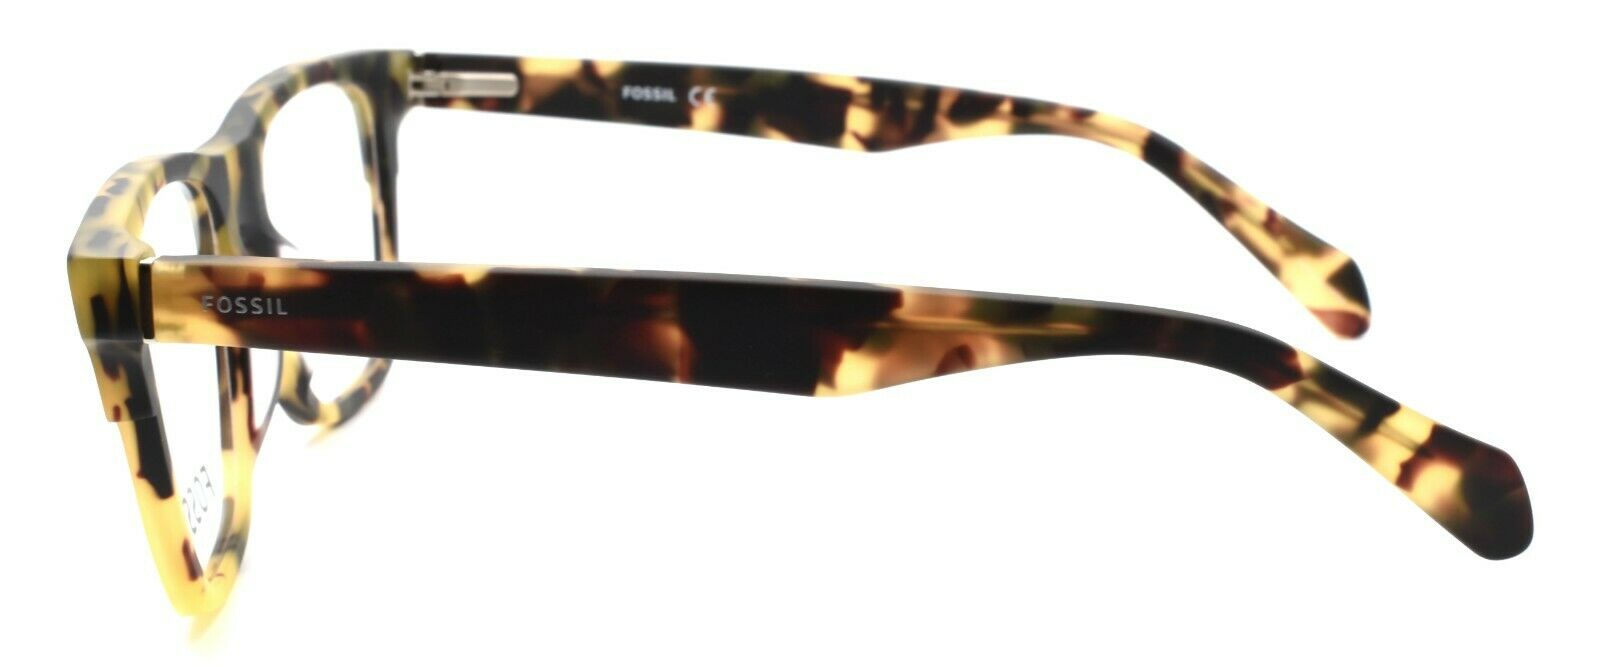 3-Fossil FOS 7031 2M6 Men's Eyeglasses Frames 52-18-140 Matte Green Havana + CASE-716736064697-IKSpecs